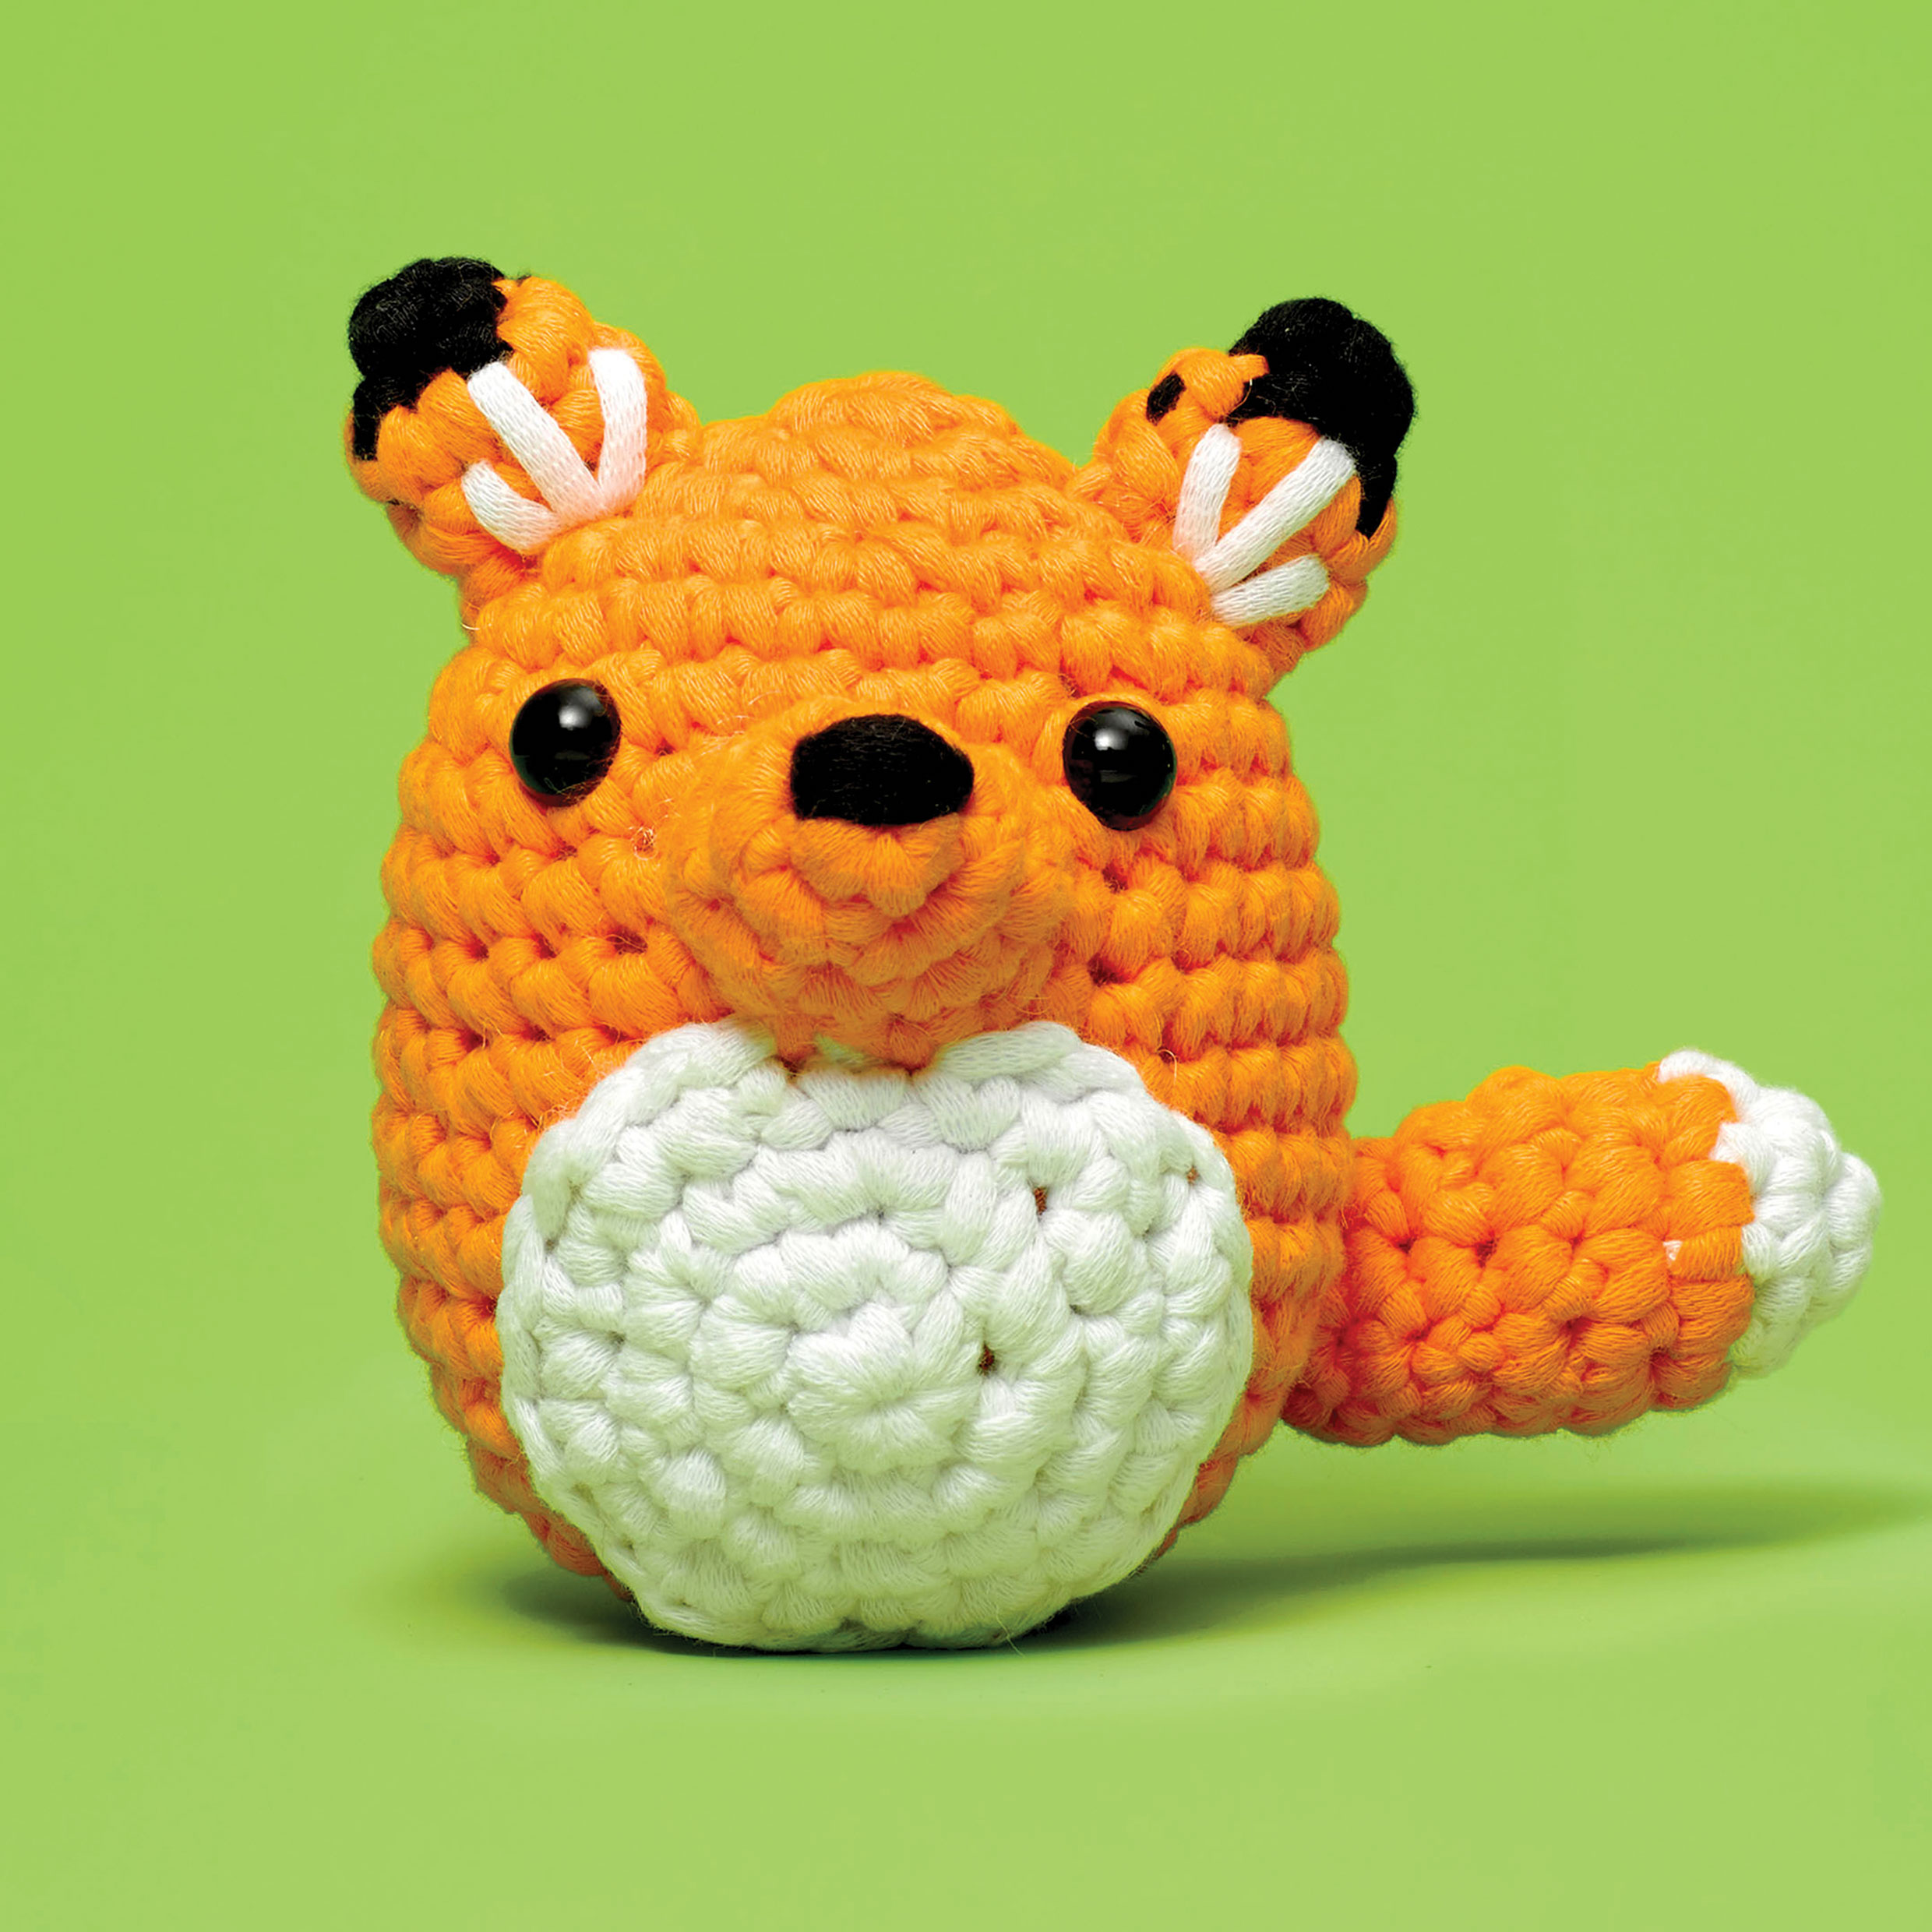 The Woobles Beginner Crochet Amigurumi Kit - Fox